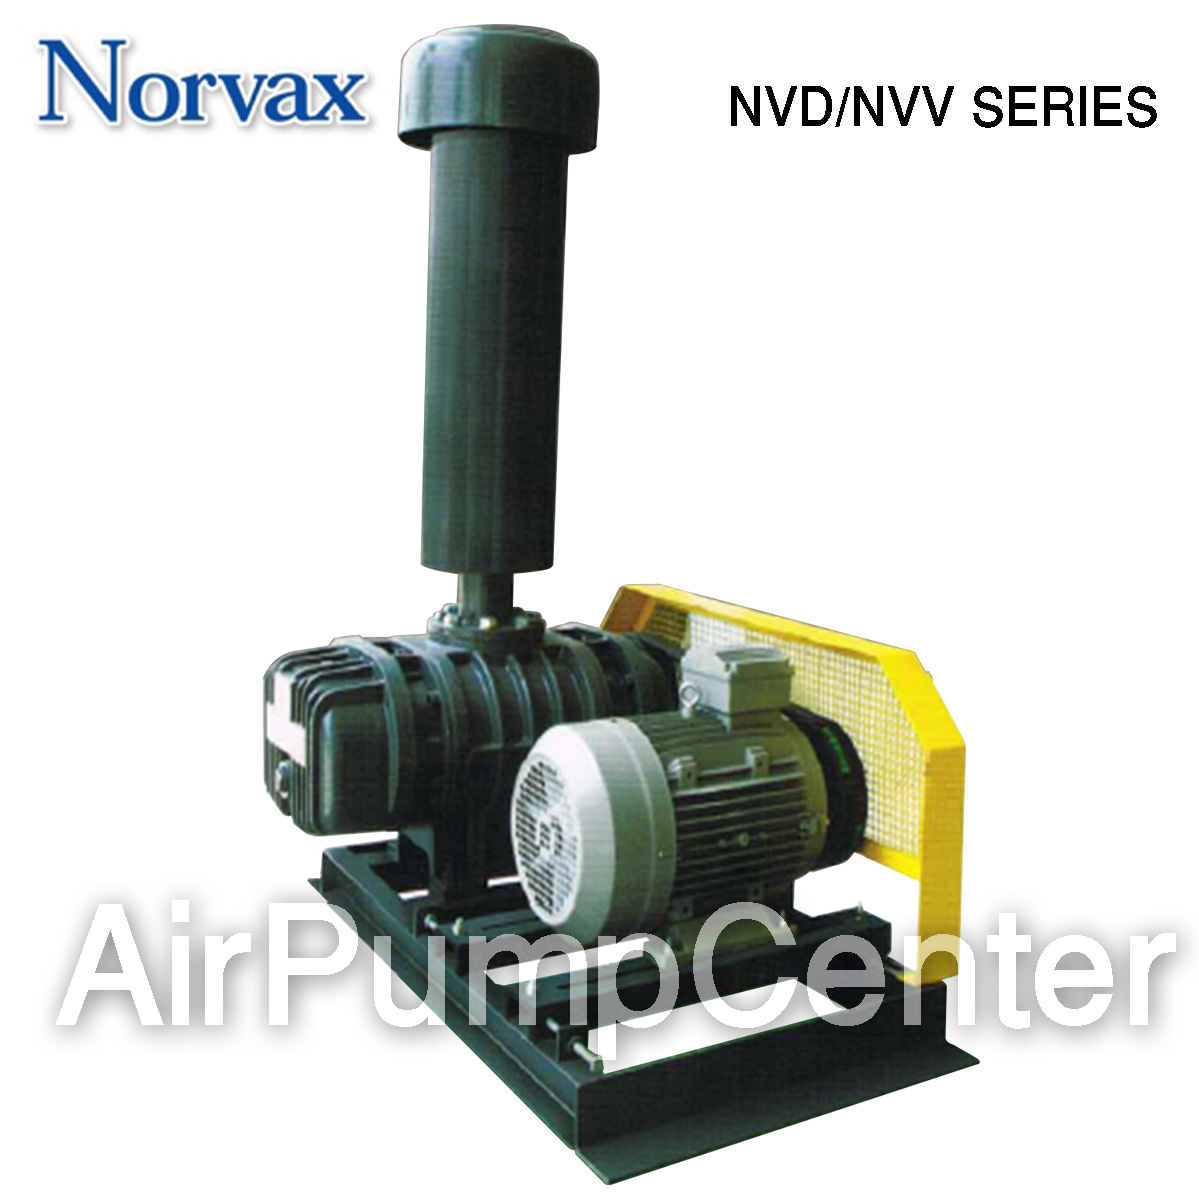 norvax , NVD Series , NVV Series